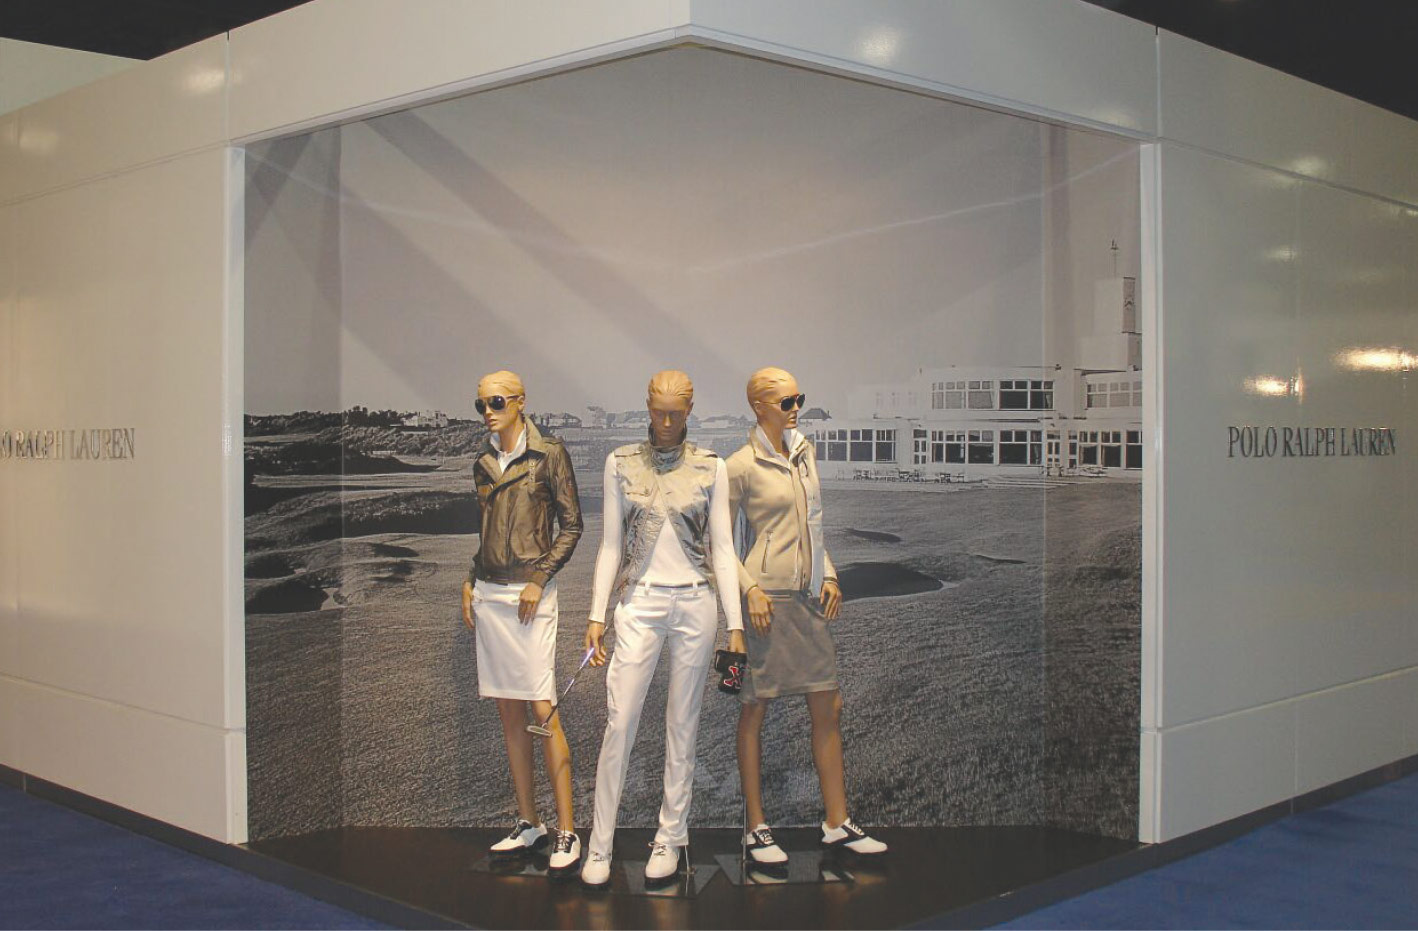 Polo Ralph Lauren Golf Trade Show Exhibit